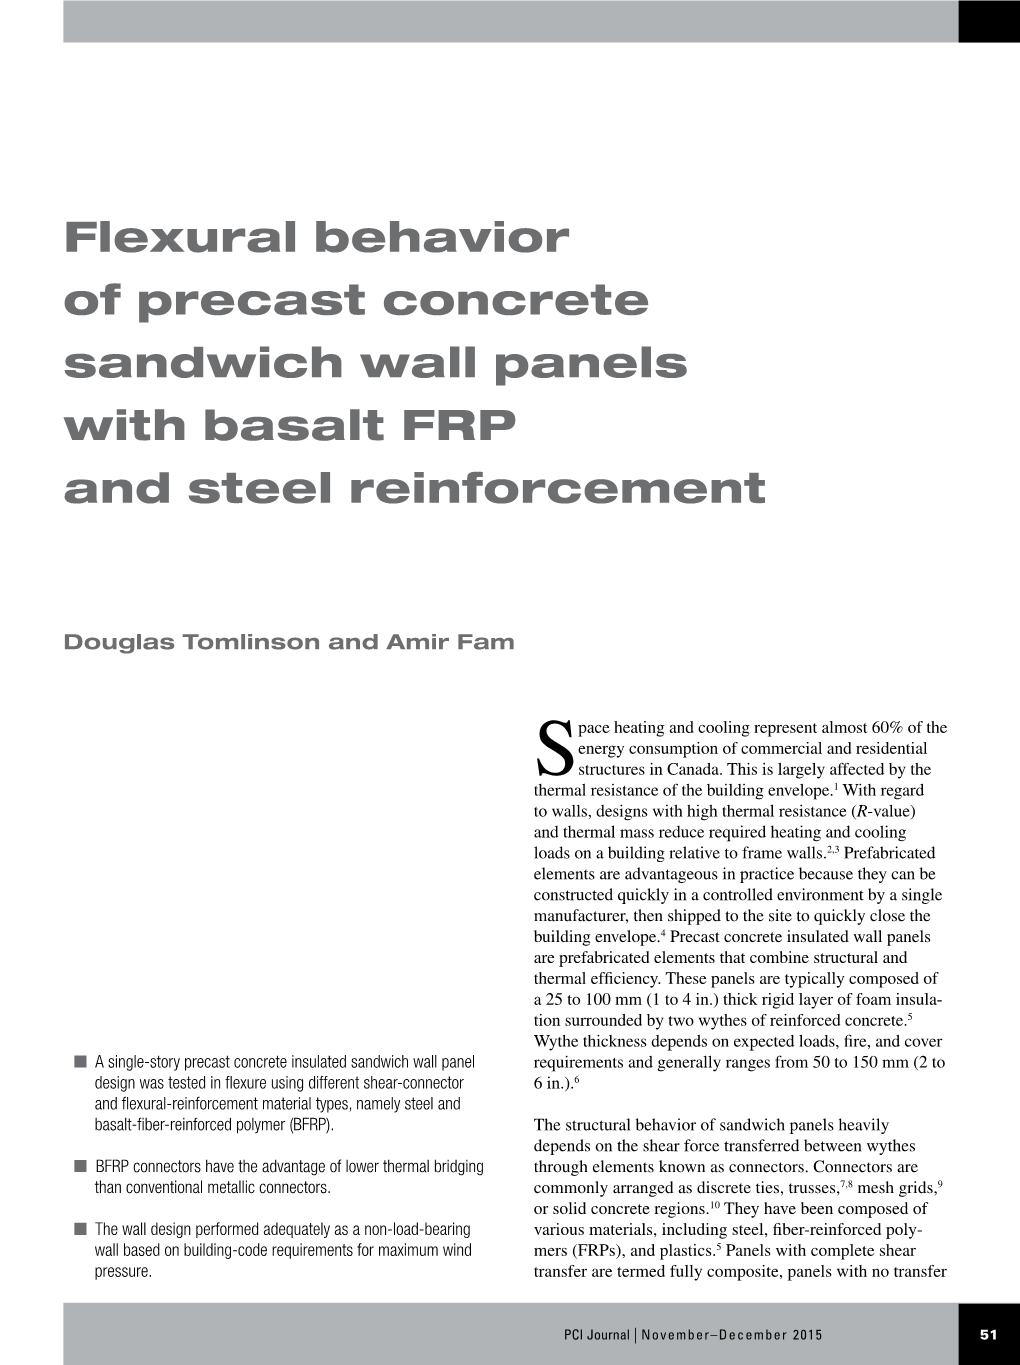 Flexural Behavior of Precast Concrete Sandwich Wall Panels with Basalt FRP and Steel Reinforcement